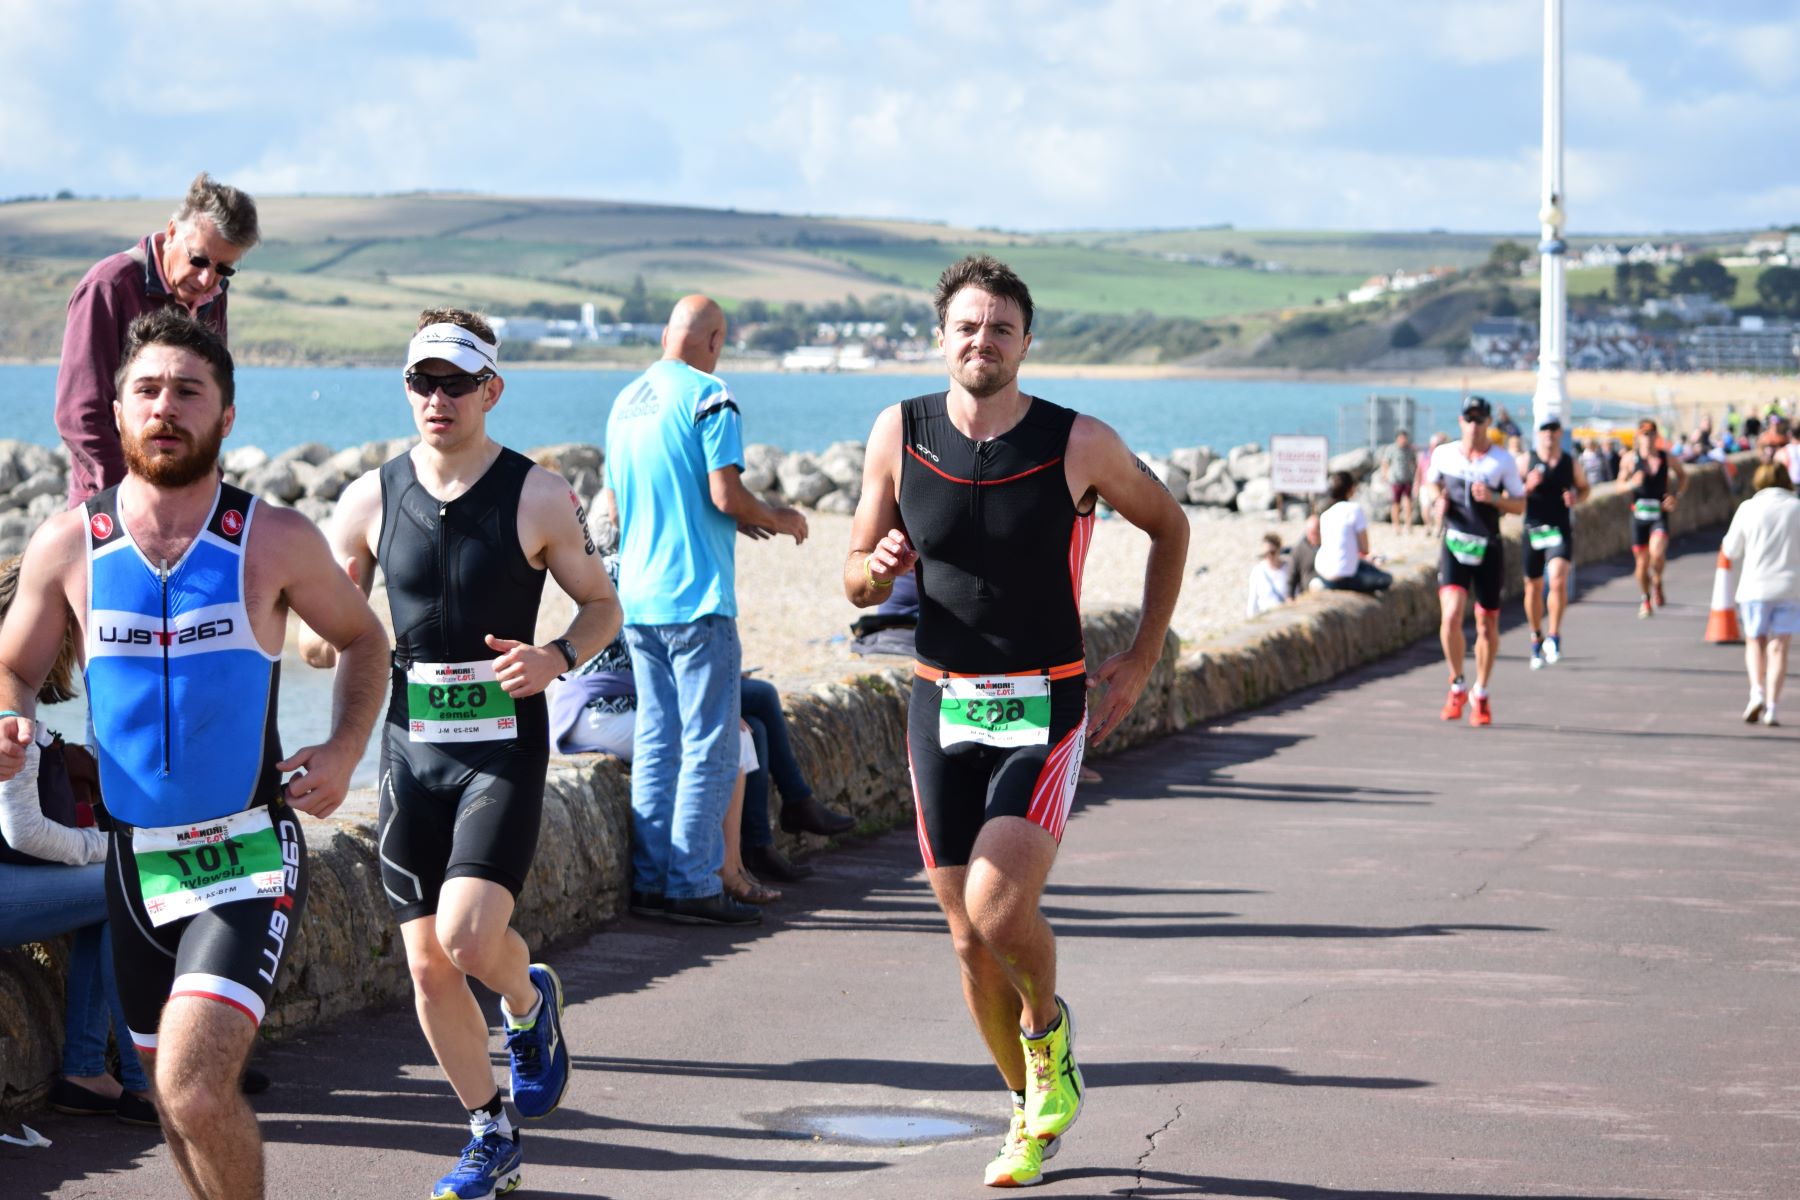 Race Report: Ironman Weymouth 70.3